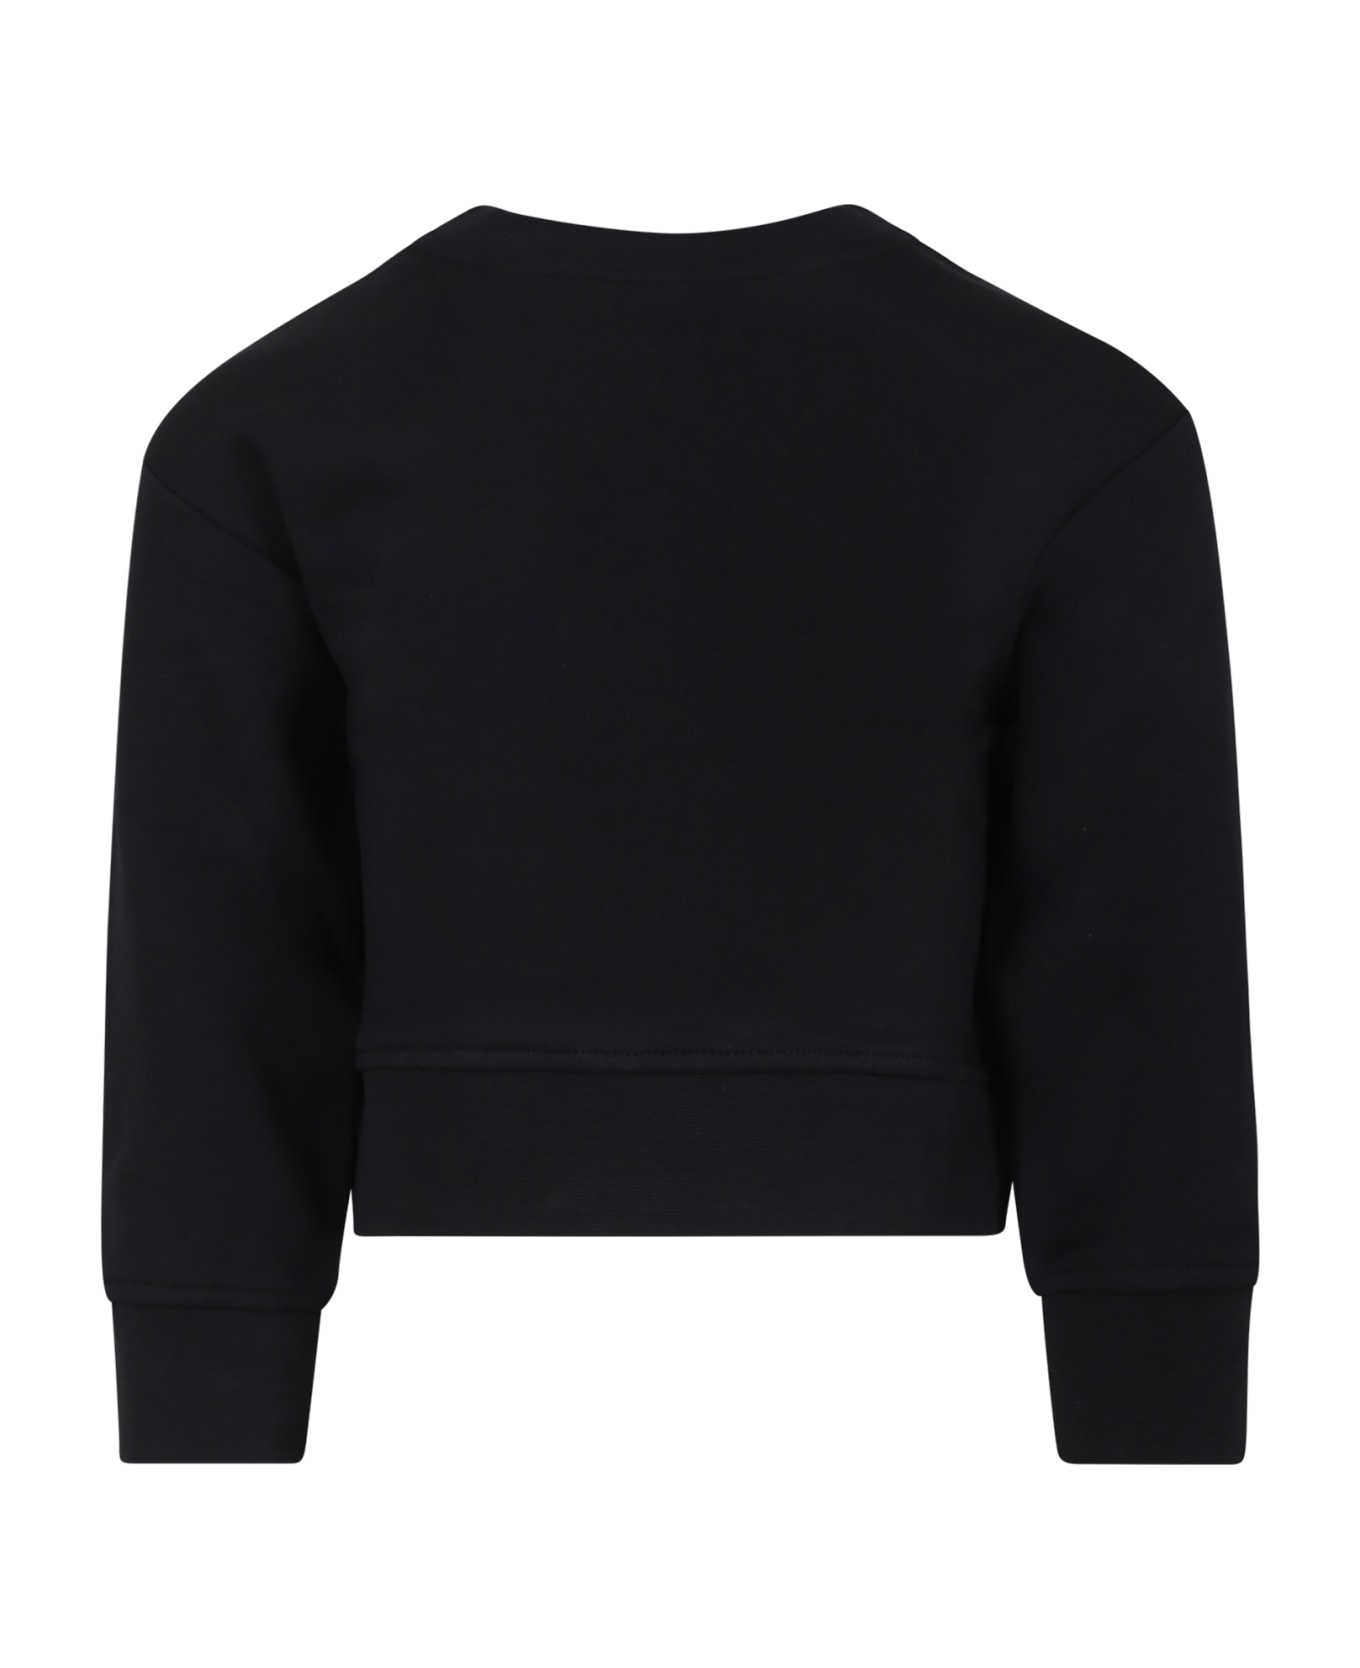 Stella McCartney Kids Black Sweatshirt For Girl With Print And Logo - Black